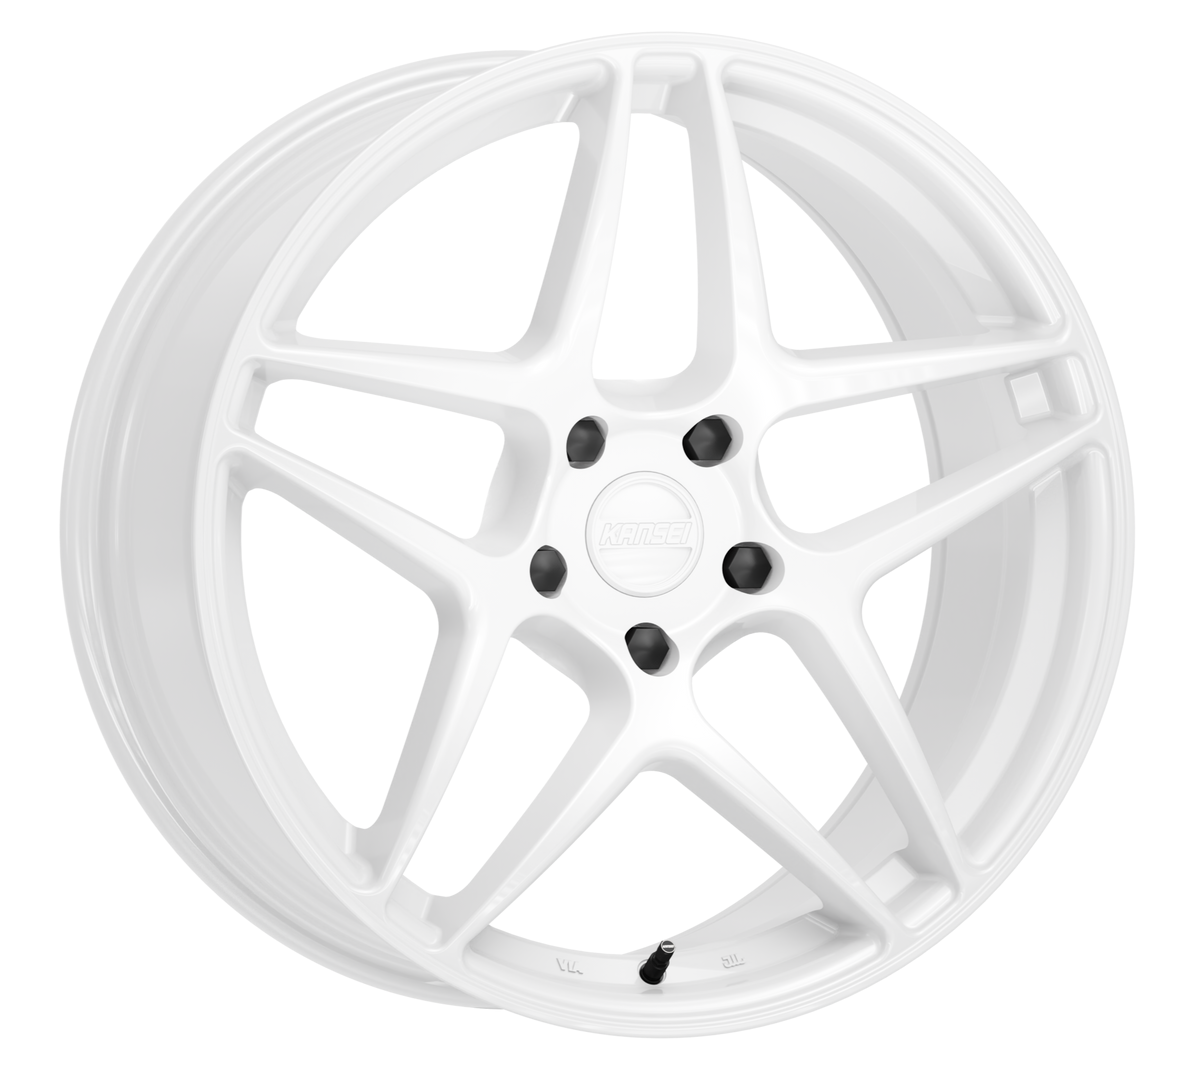 K15W ASTRO Wheel, Size: 18" x 9", Bolt Pattern: 5 x 120 mm, Backspace: 5.87" [Finish: Gloss White]